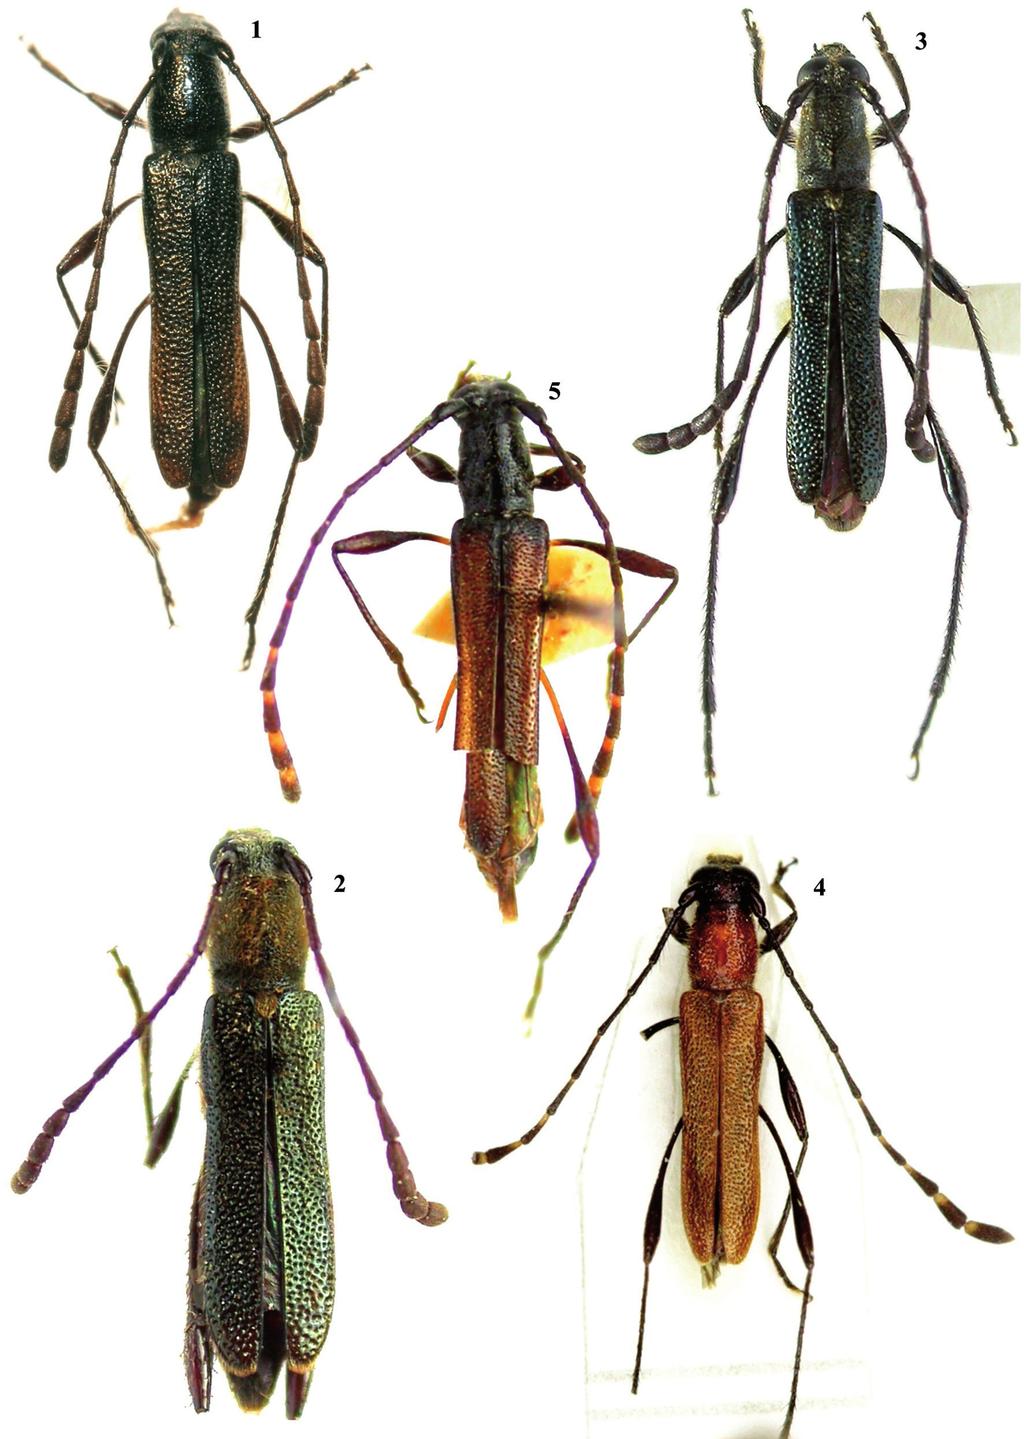 332 Clarke, R.O.S. et al.: Estudos taxonômicos em Rhinotragini IV Figuras 1 5: Vista dorsal: 1. Rhopalessa subandina sp. nov., holótipo fêmea; 2. R. hirticollis (Zajciw, 1958), parátipo fêmea; 3. R. pilosicollis (Zajciw, 1966), macho; 4.